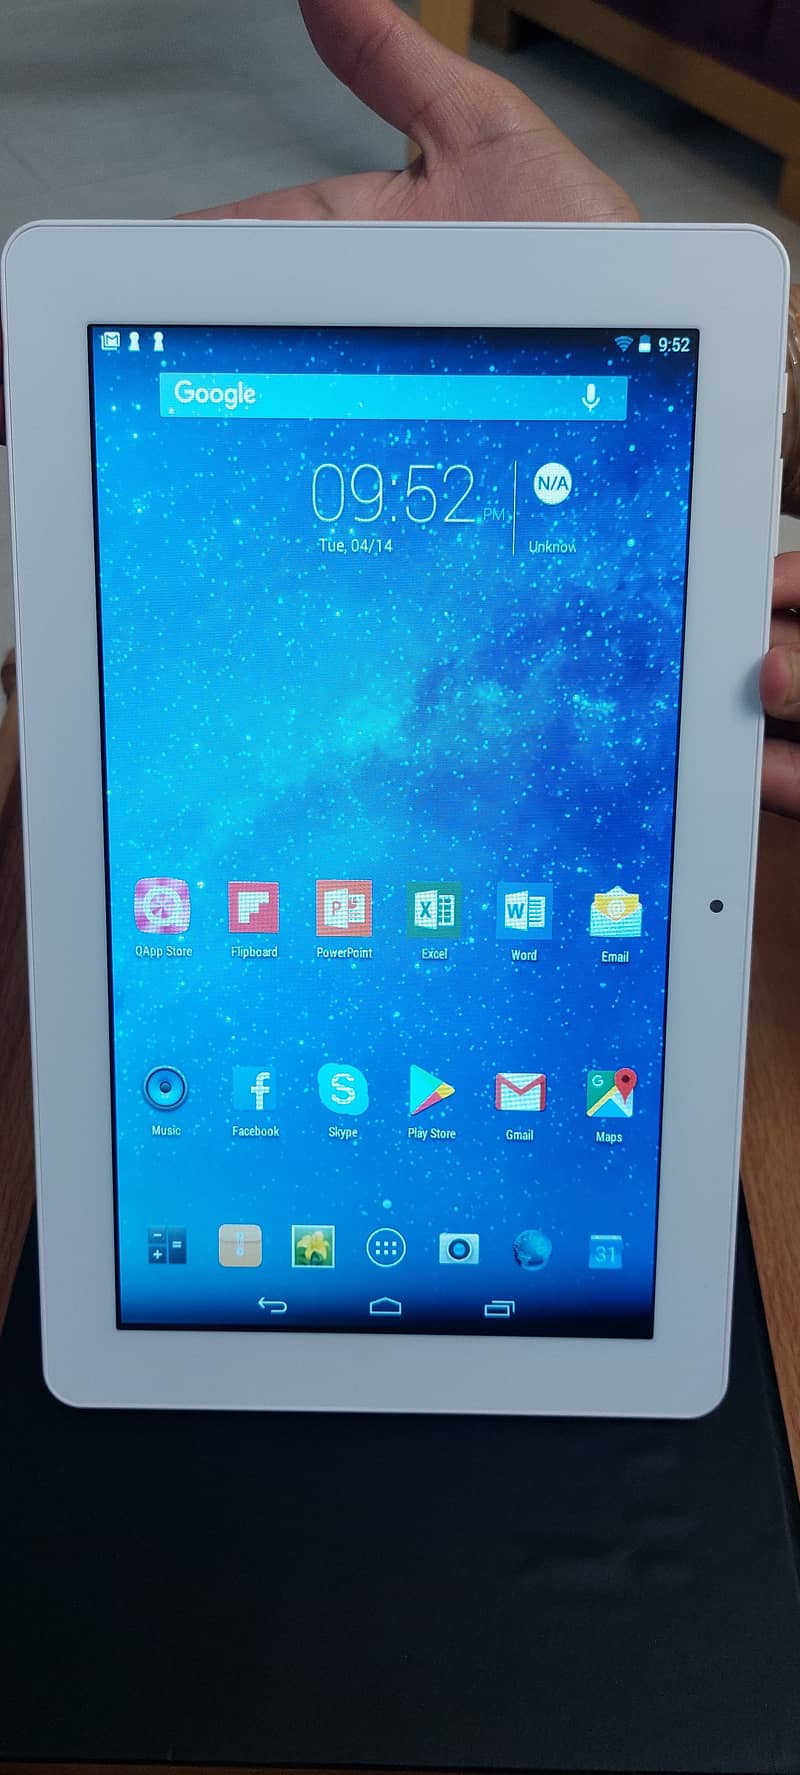 Tablet Q Mobile 0